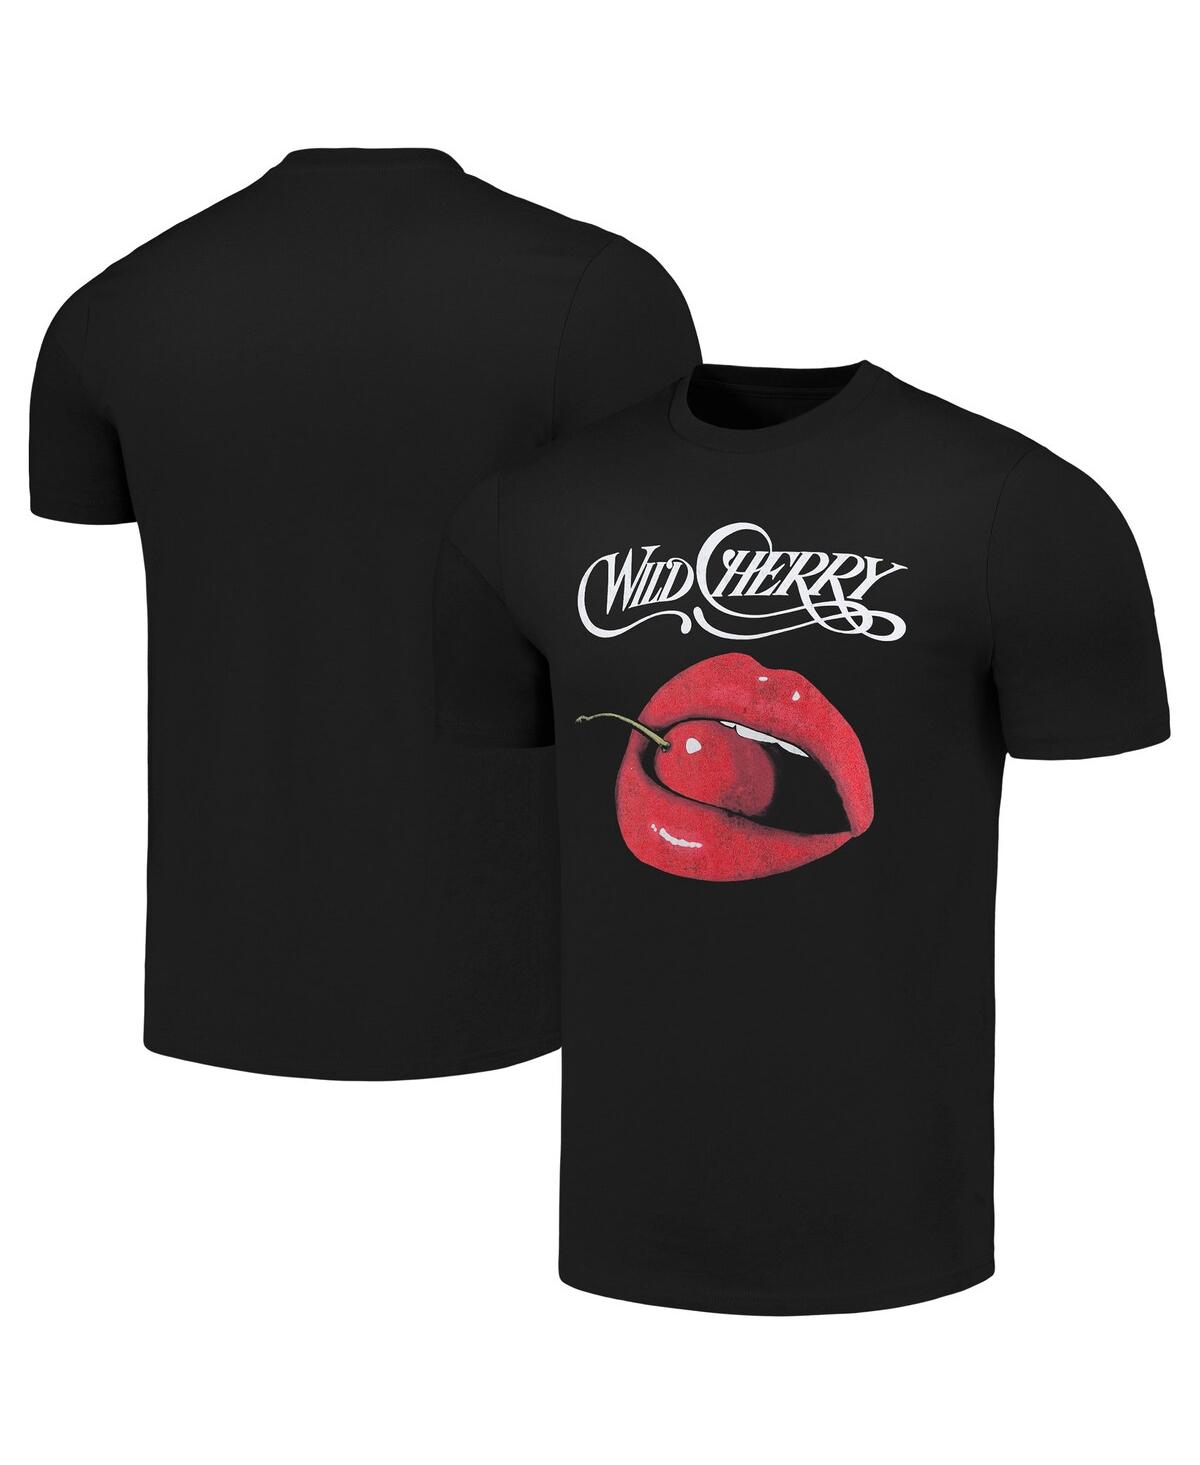 Shop American Classics Men's Black Wild Cherry Bite T-shirt